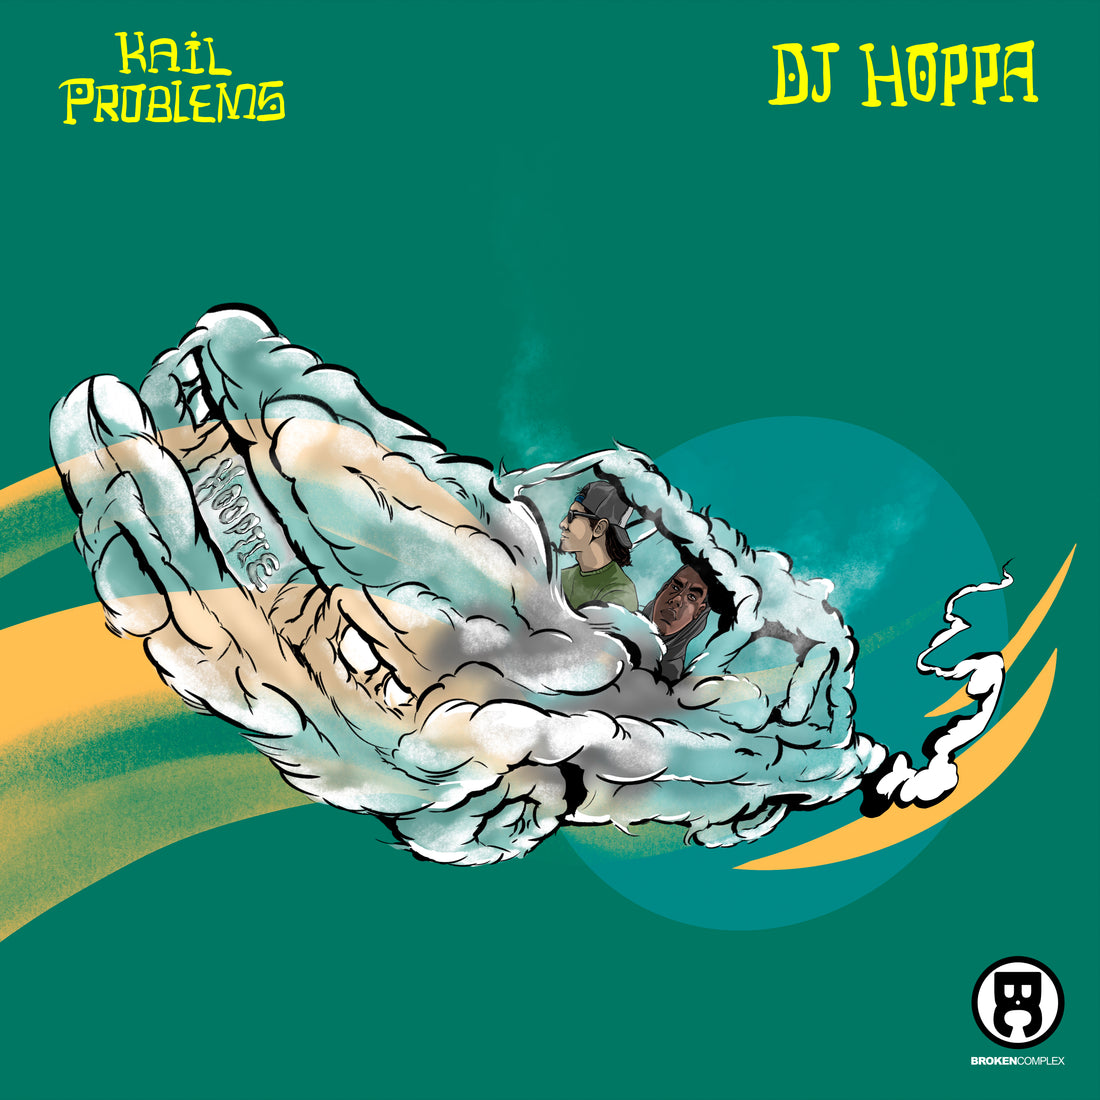 New Single: Kail Problems & DJ Hoppa - "Hooptie"